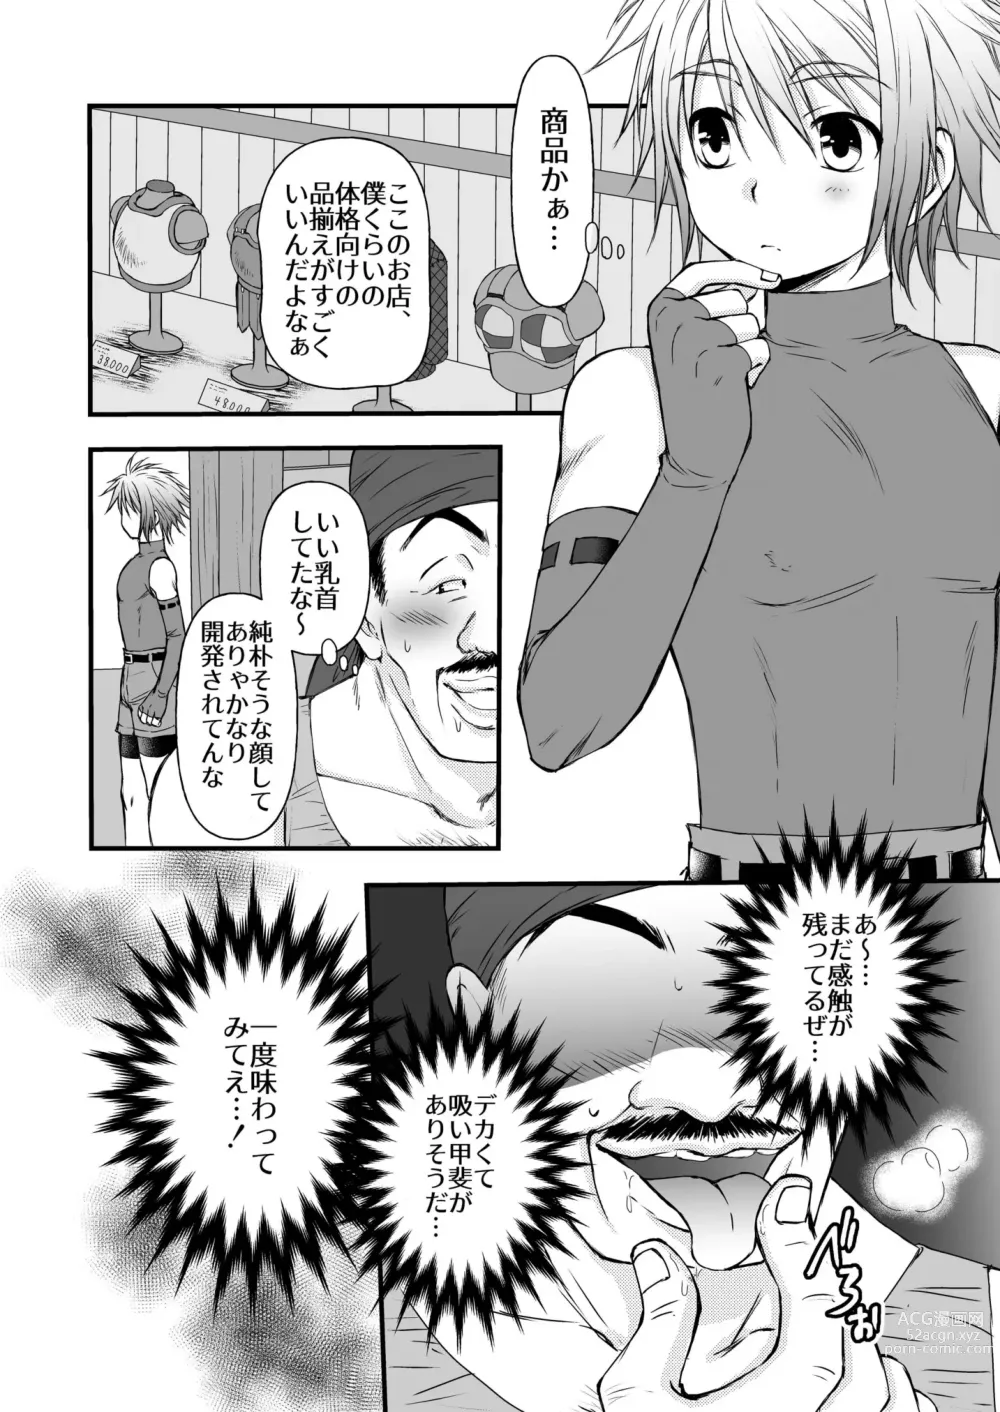 Page 8 of doujinshi Benshoushiro ga Tarinakute